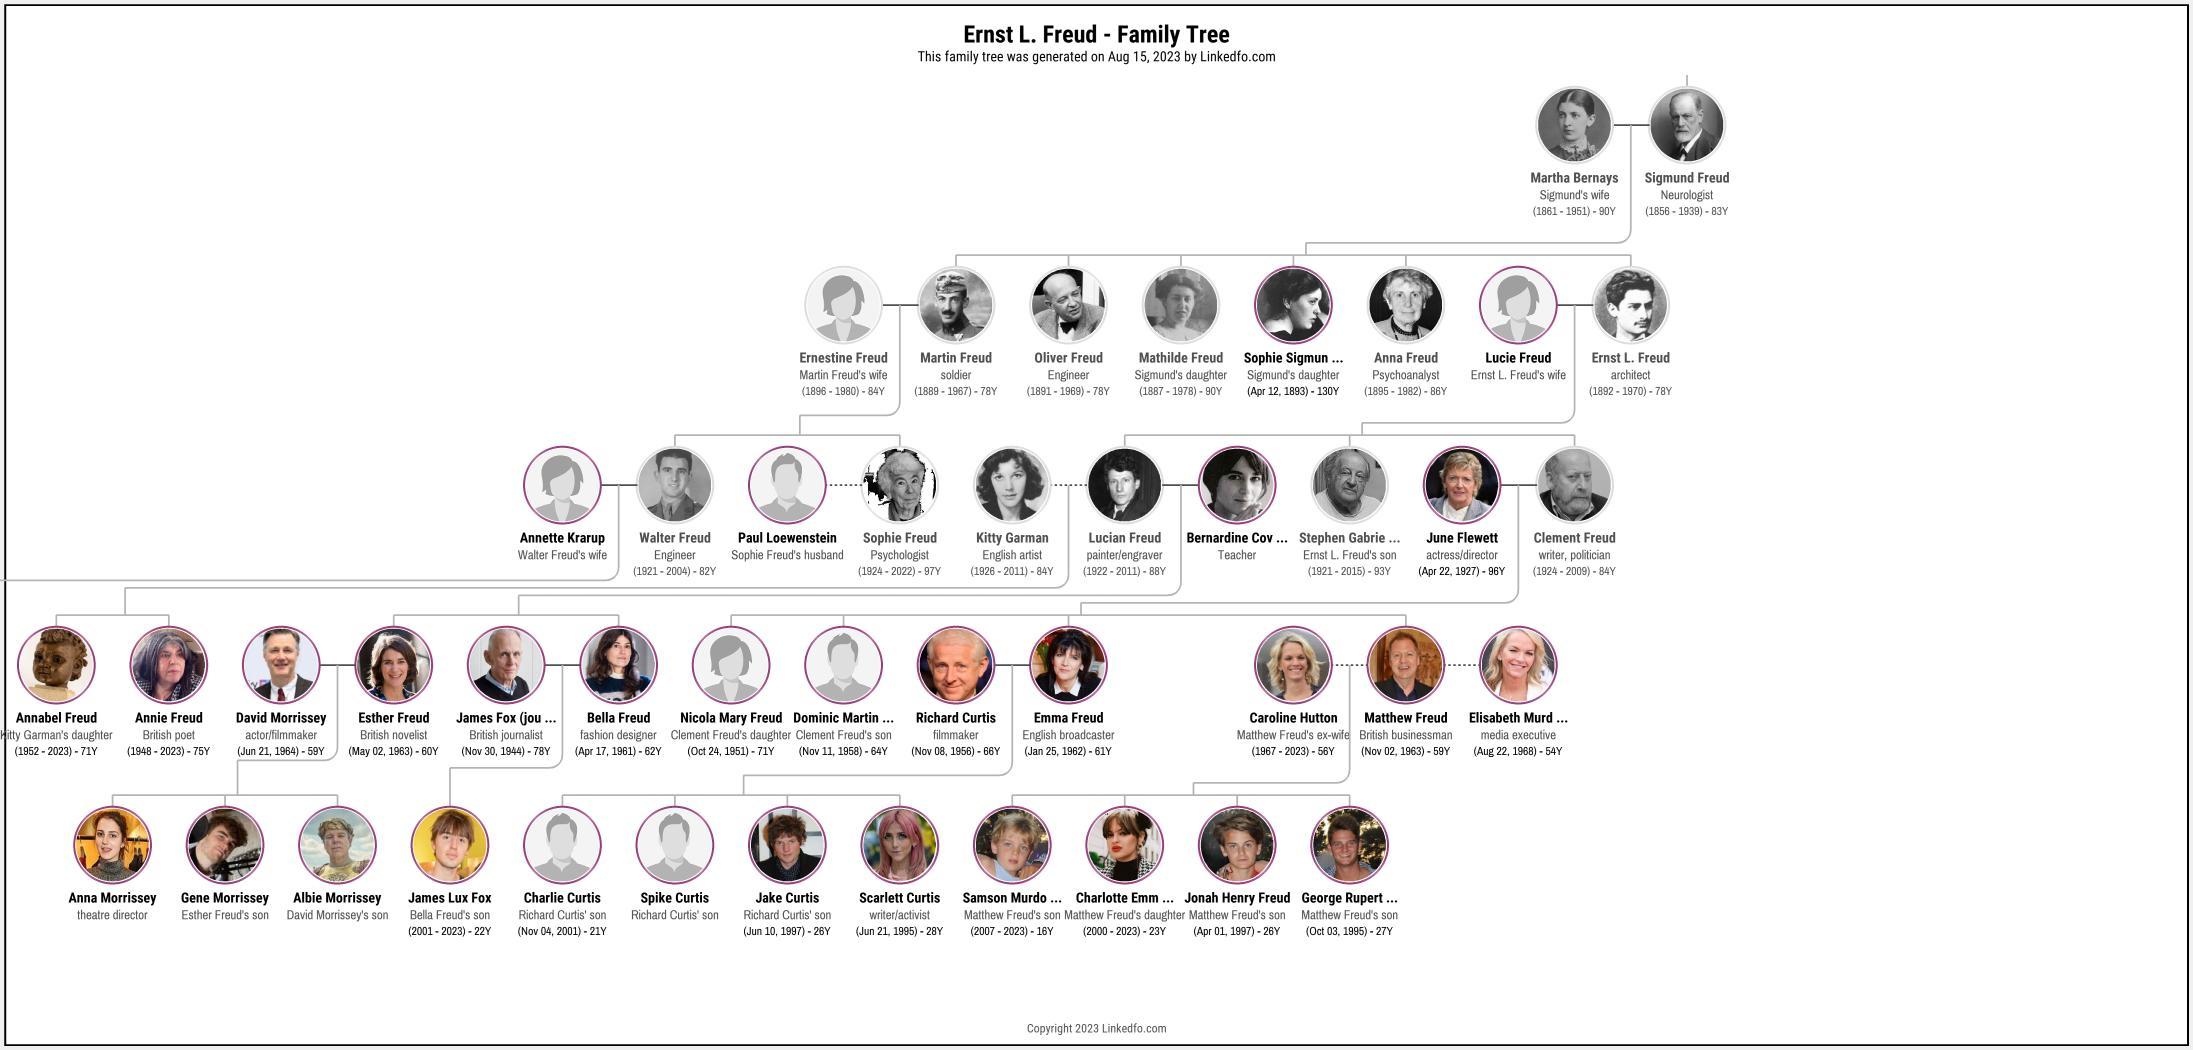 Ernst L. Freud's Family Tree